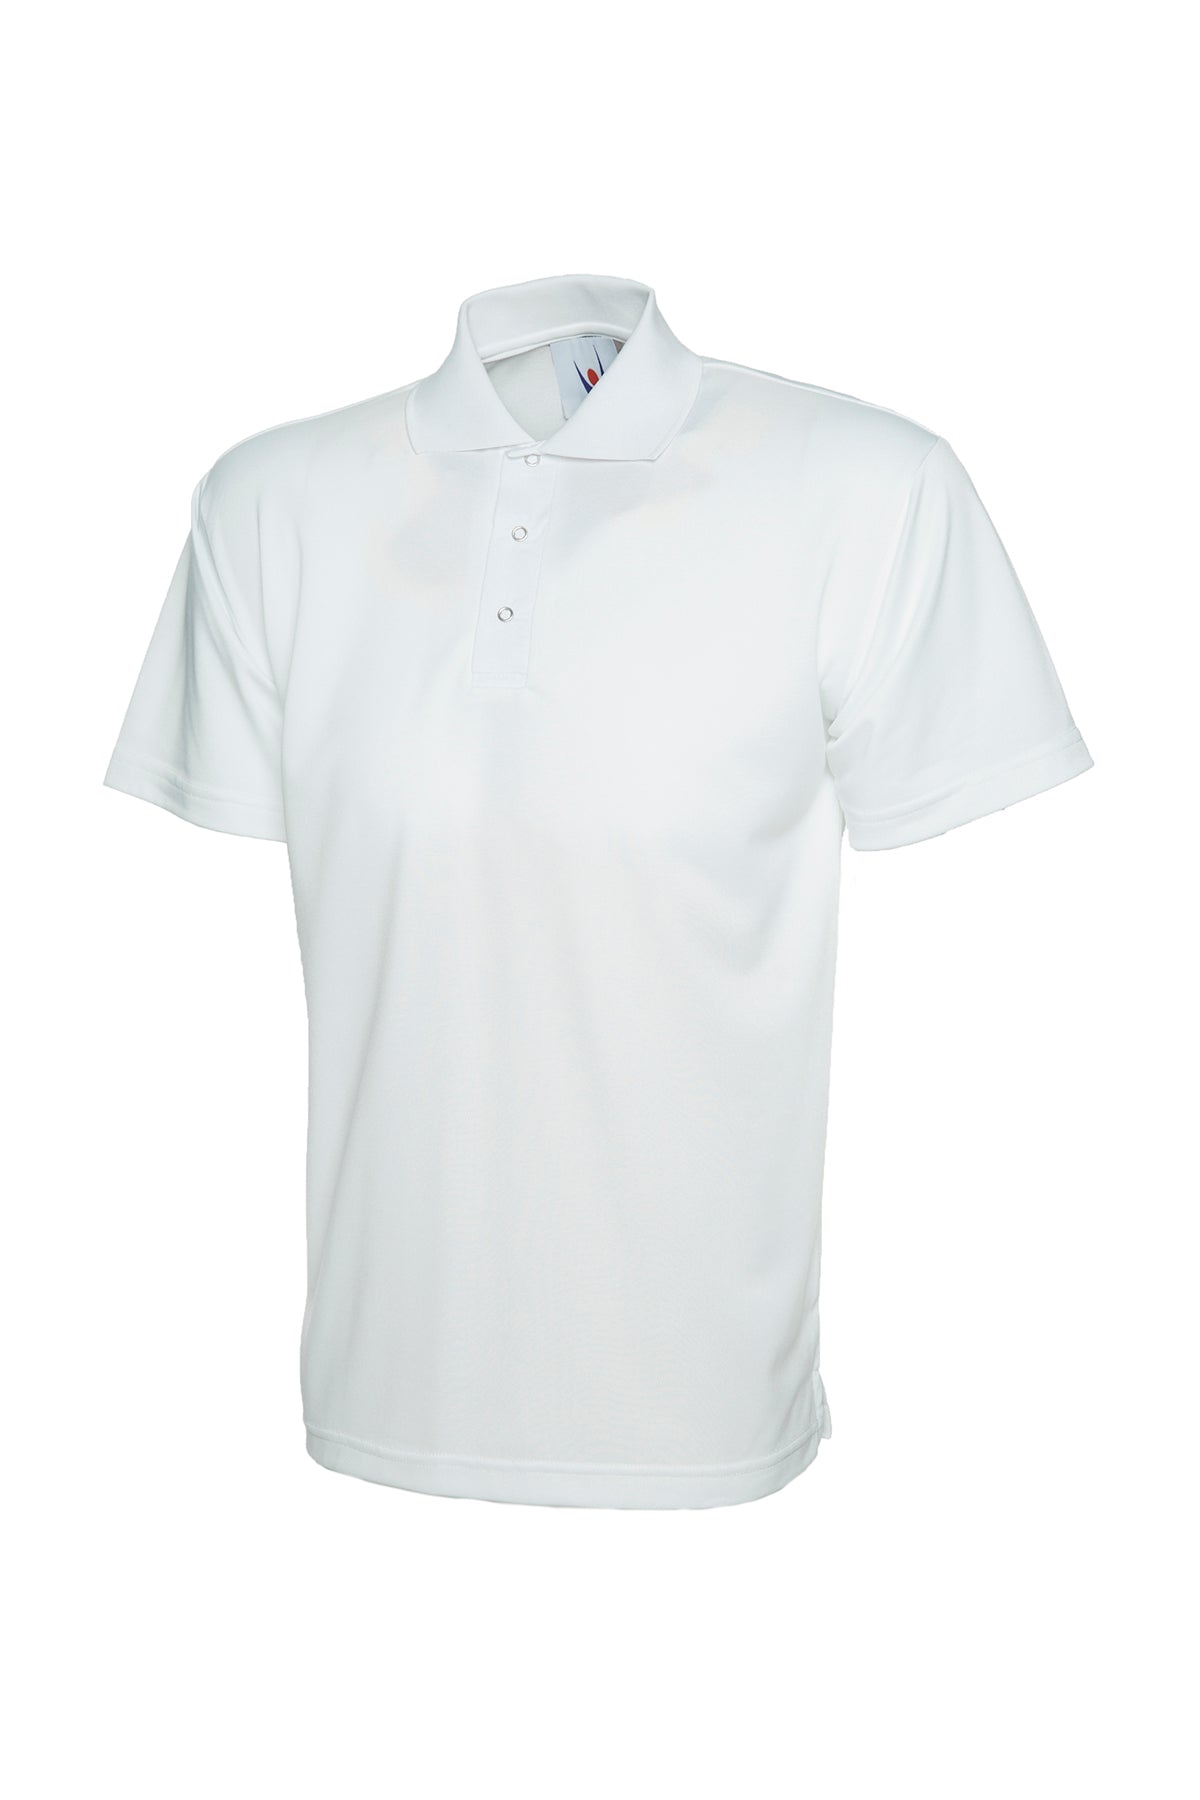 Uneek UC121 Men Polo Shirt Short Sleeve White